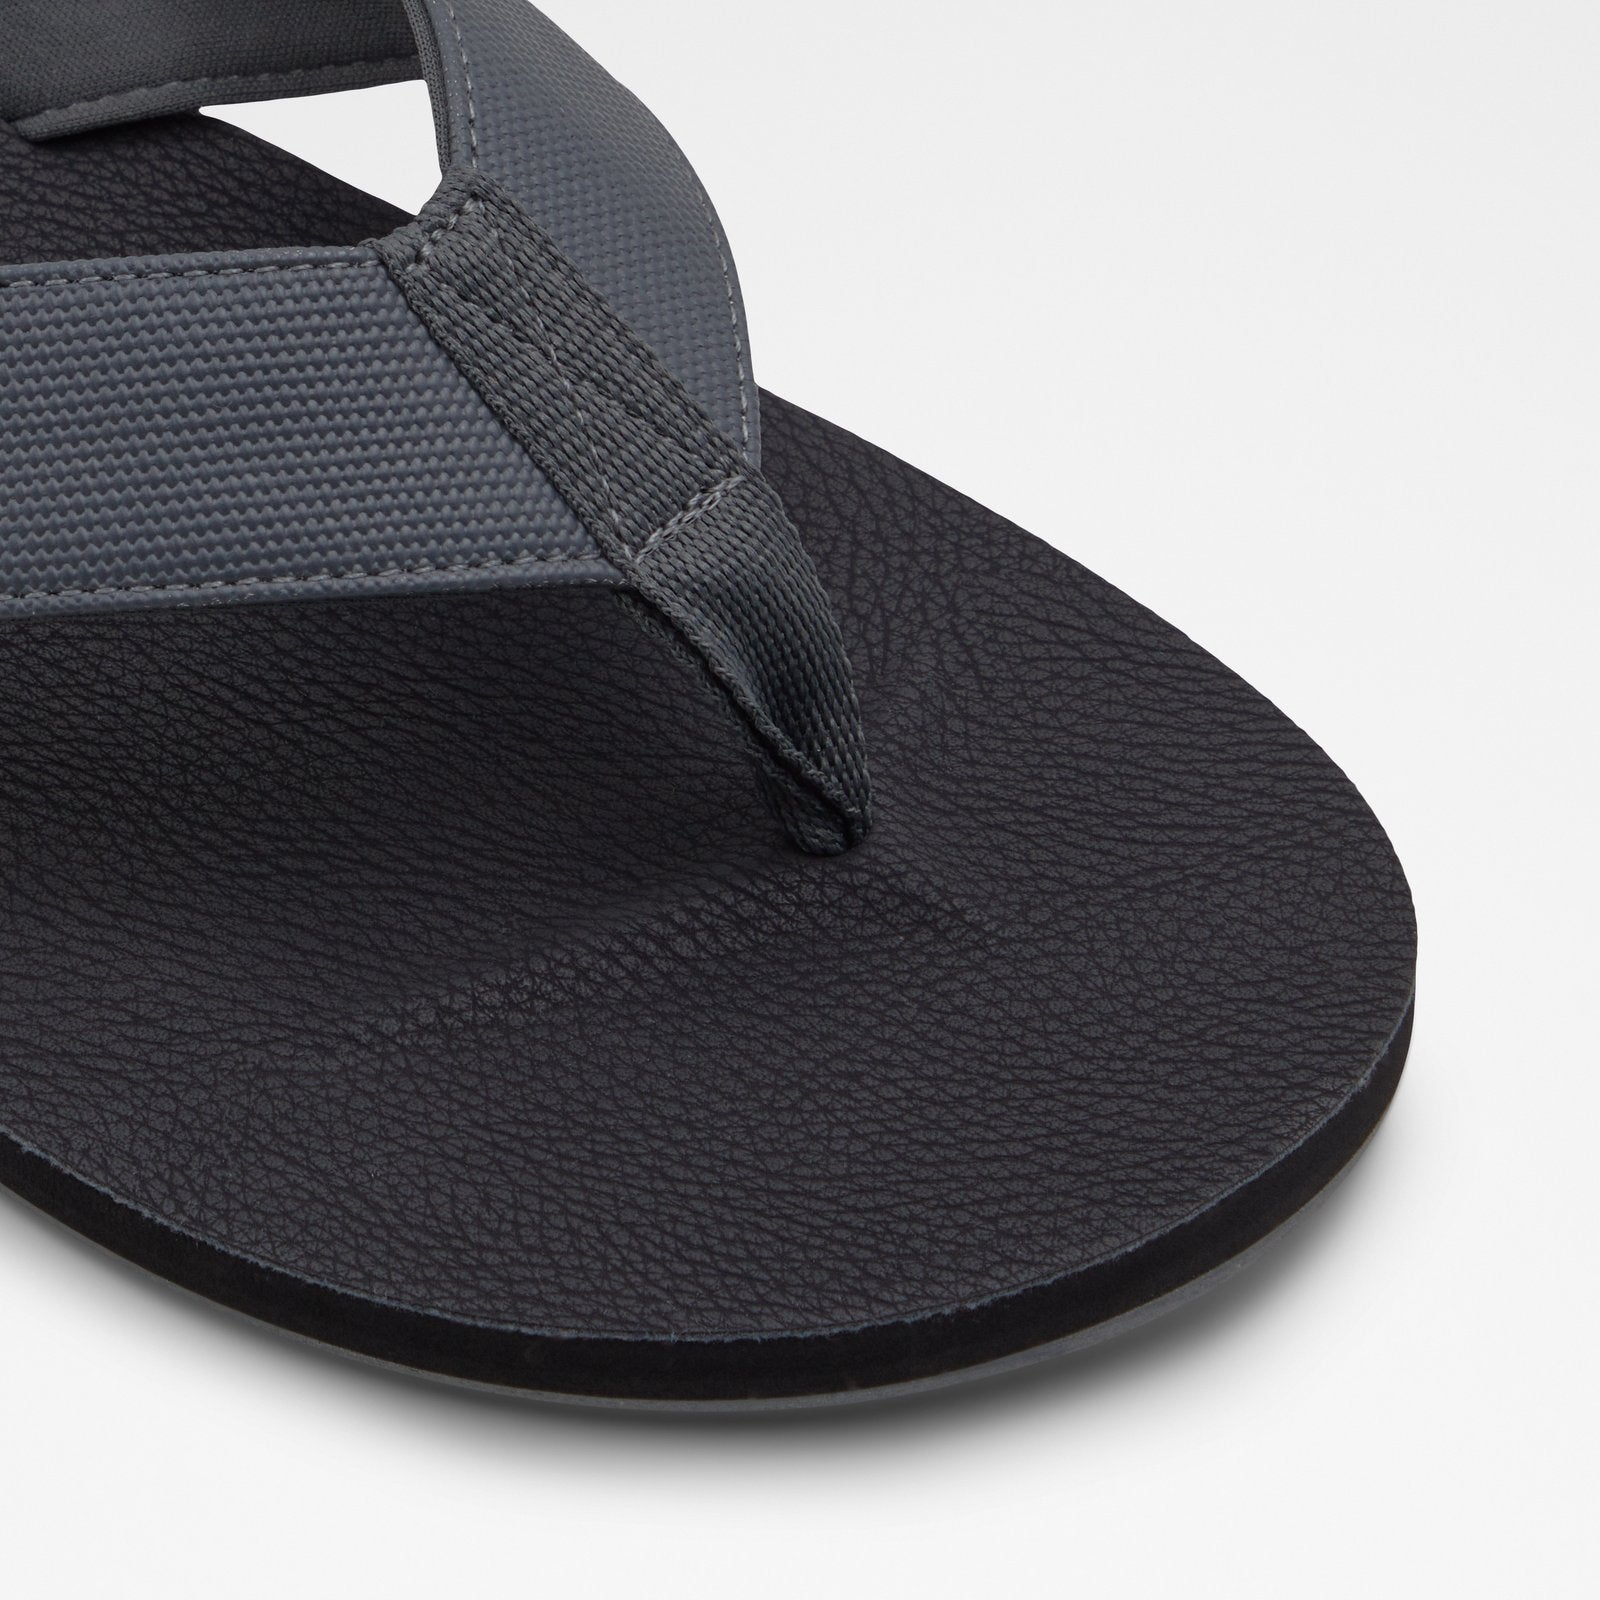 Weallere / Test / Flat Sandals Men Shoes - Dark Gray - ALDO KSA